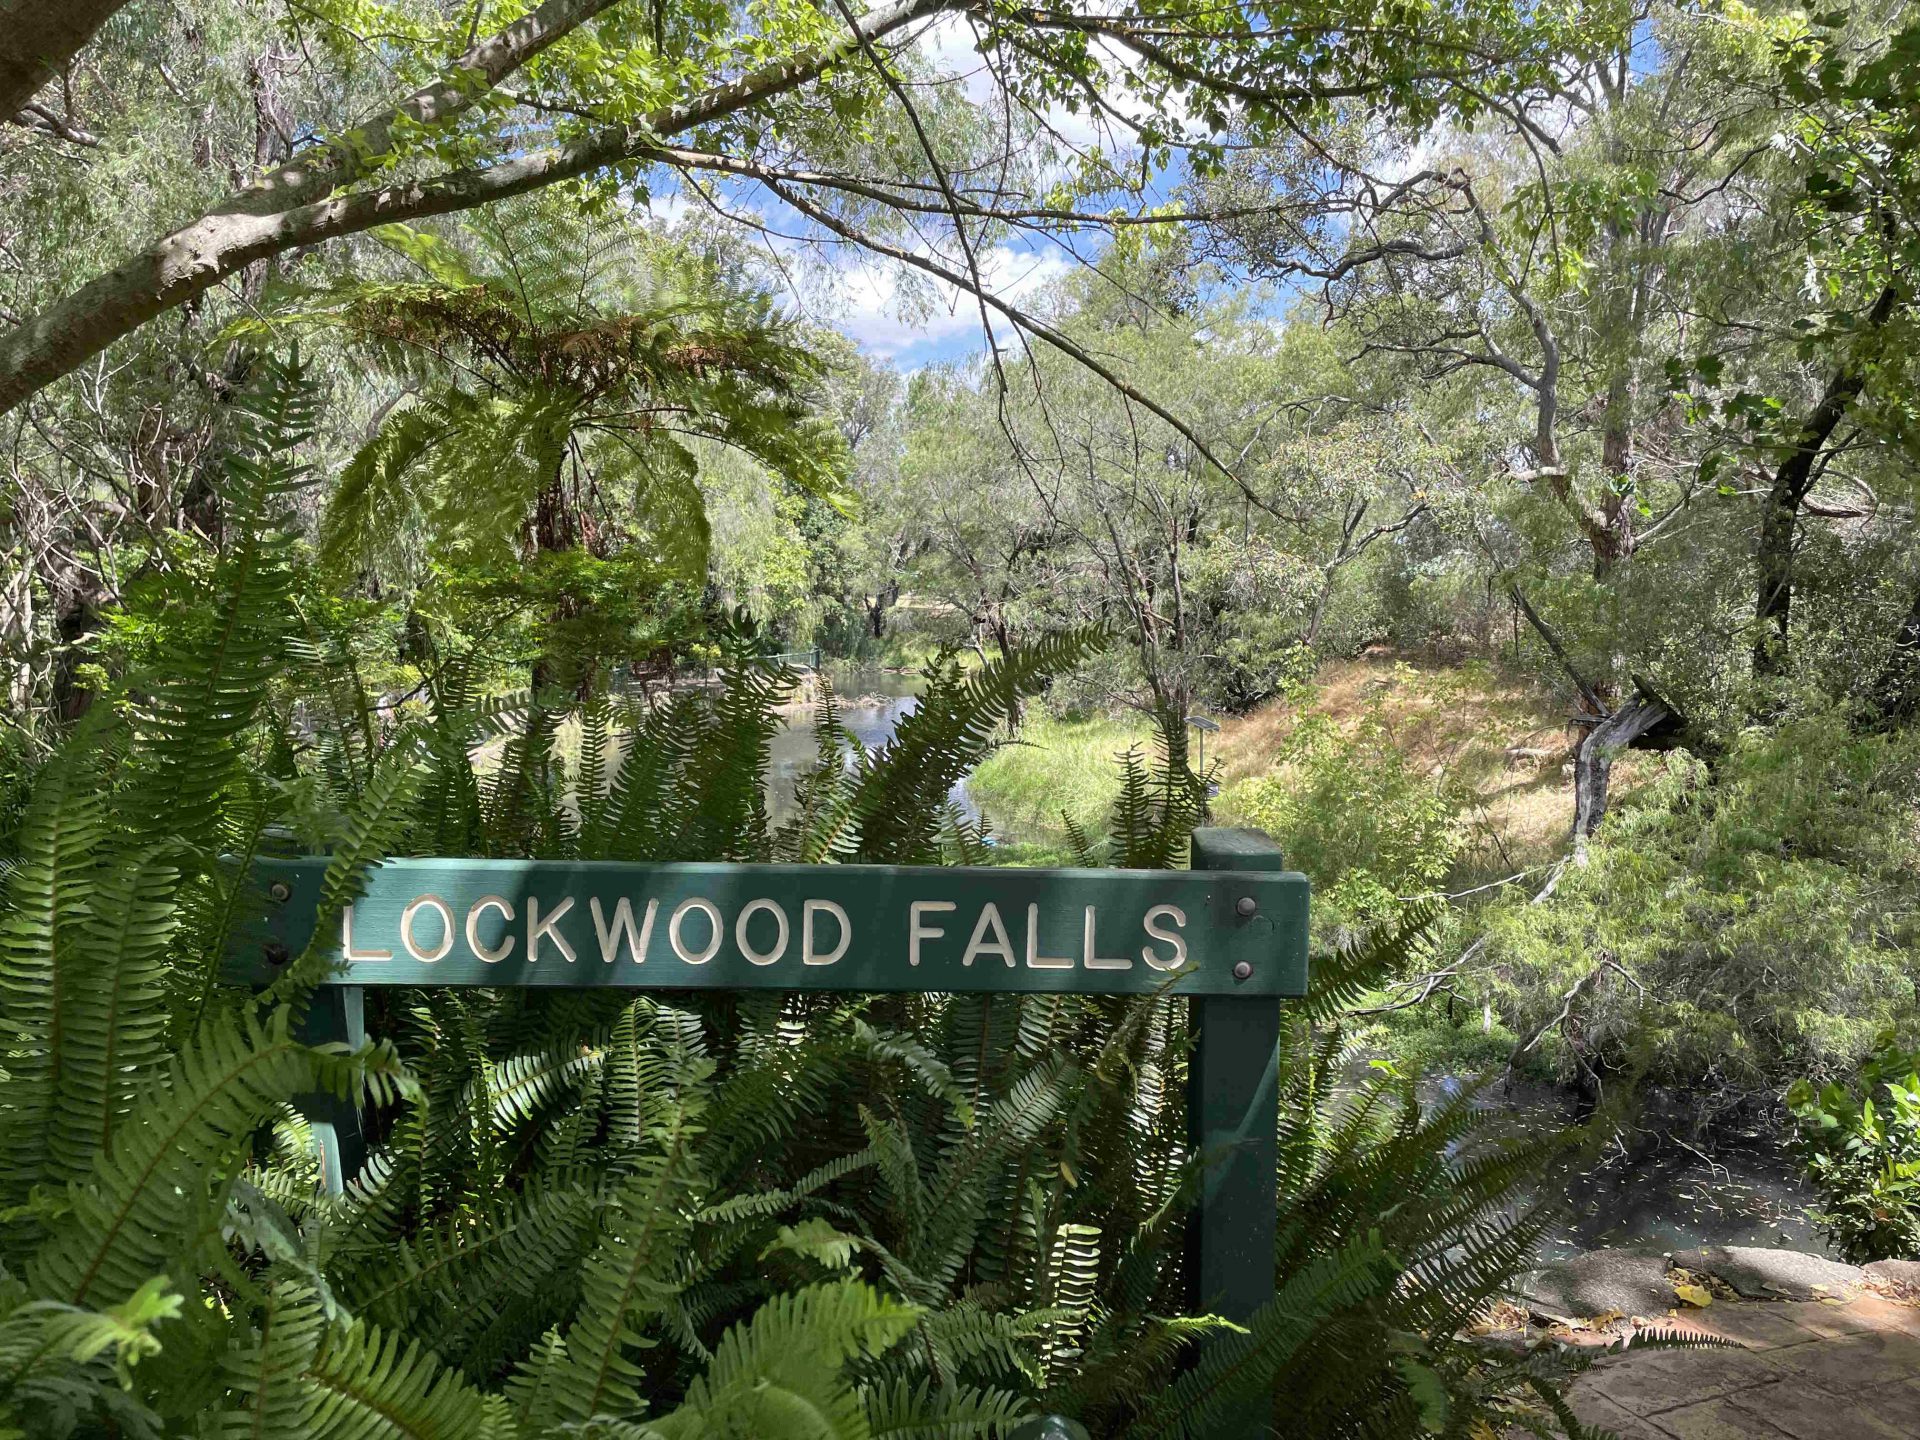 Lockwood-Falls-Stirling-Gardens-LR-1920x1440.jpg